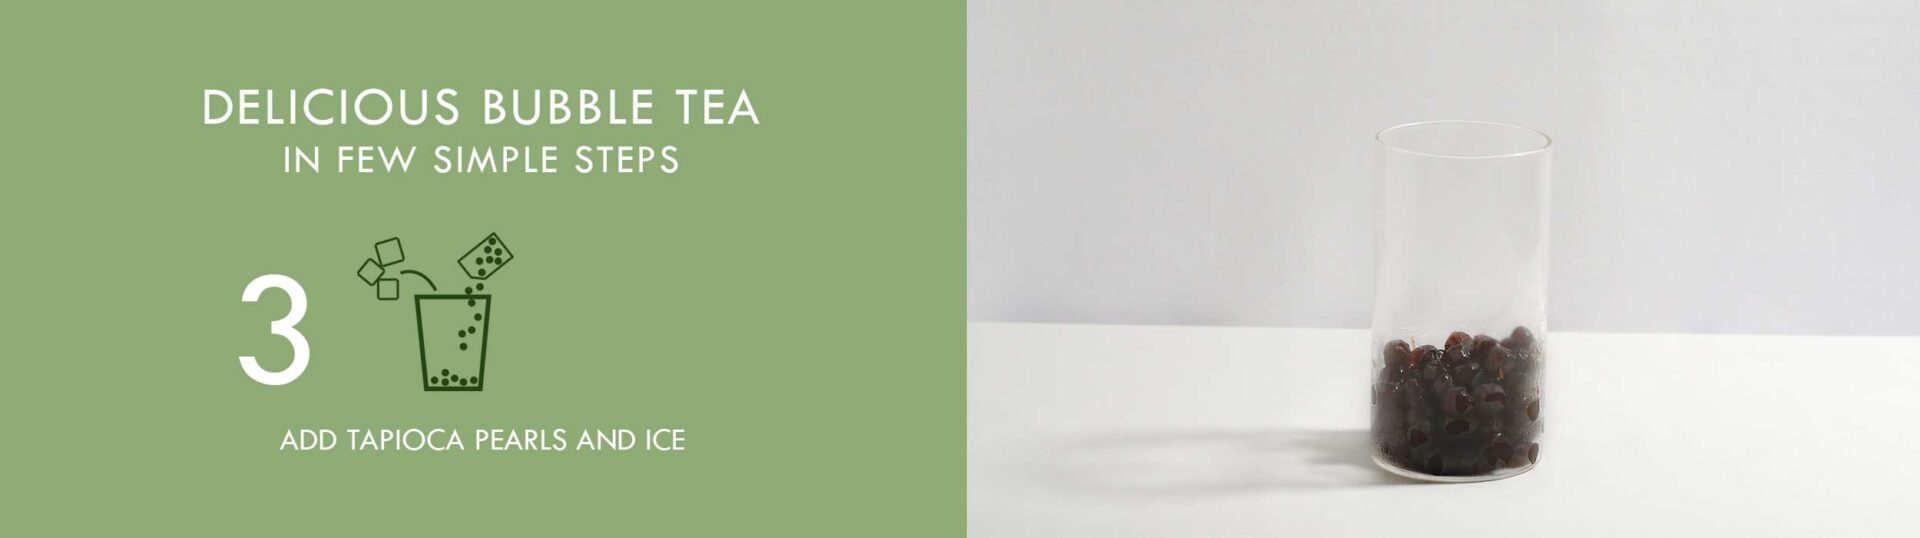 bubble tea instruction slides step 3 add tapioca pearls